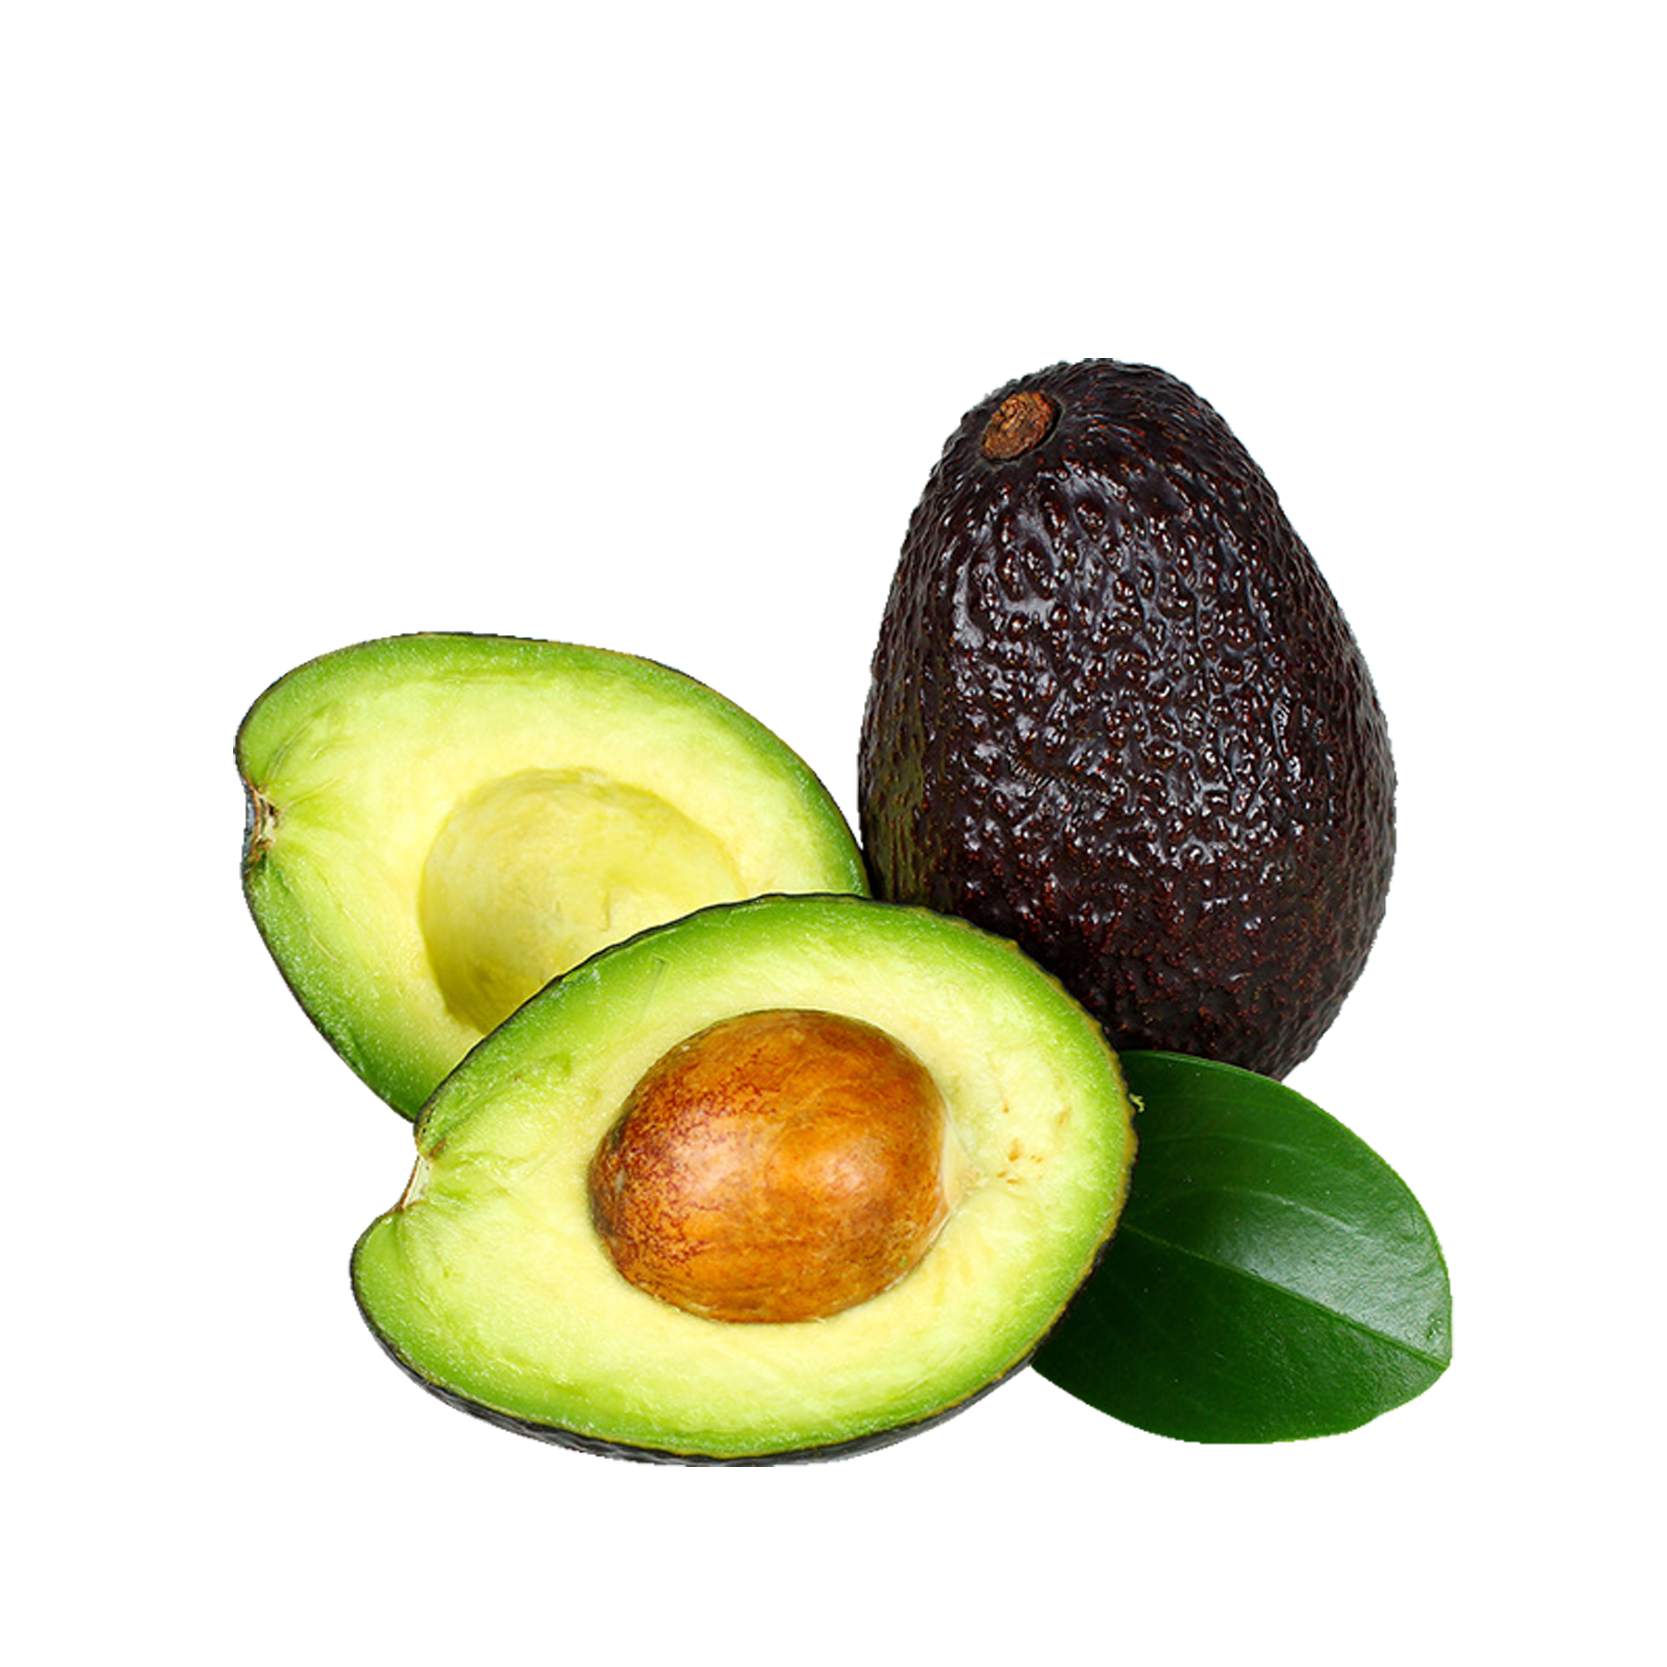 kisspng-avocado-food-fruit-hair-avocado-5a6f250a249126.9385989615172334181498